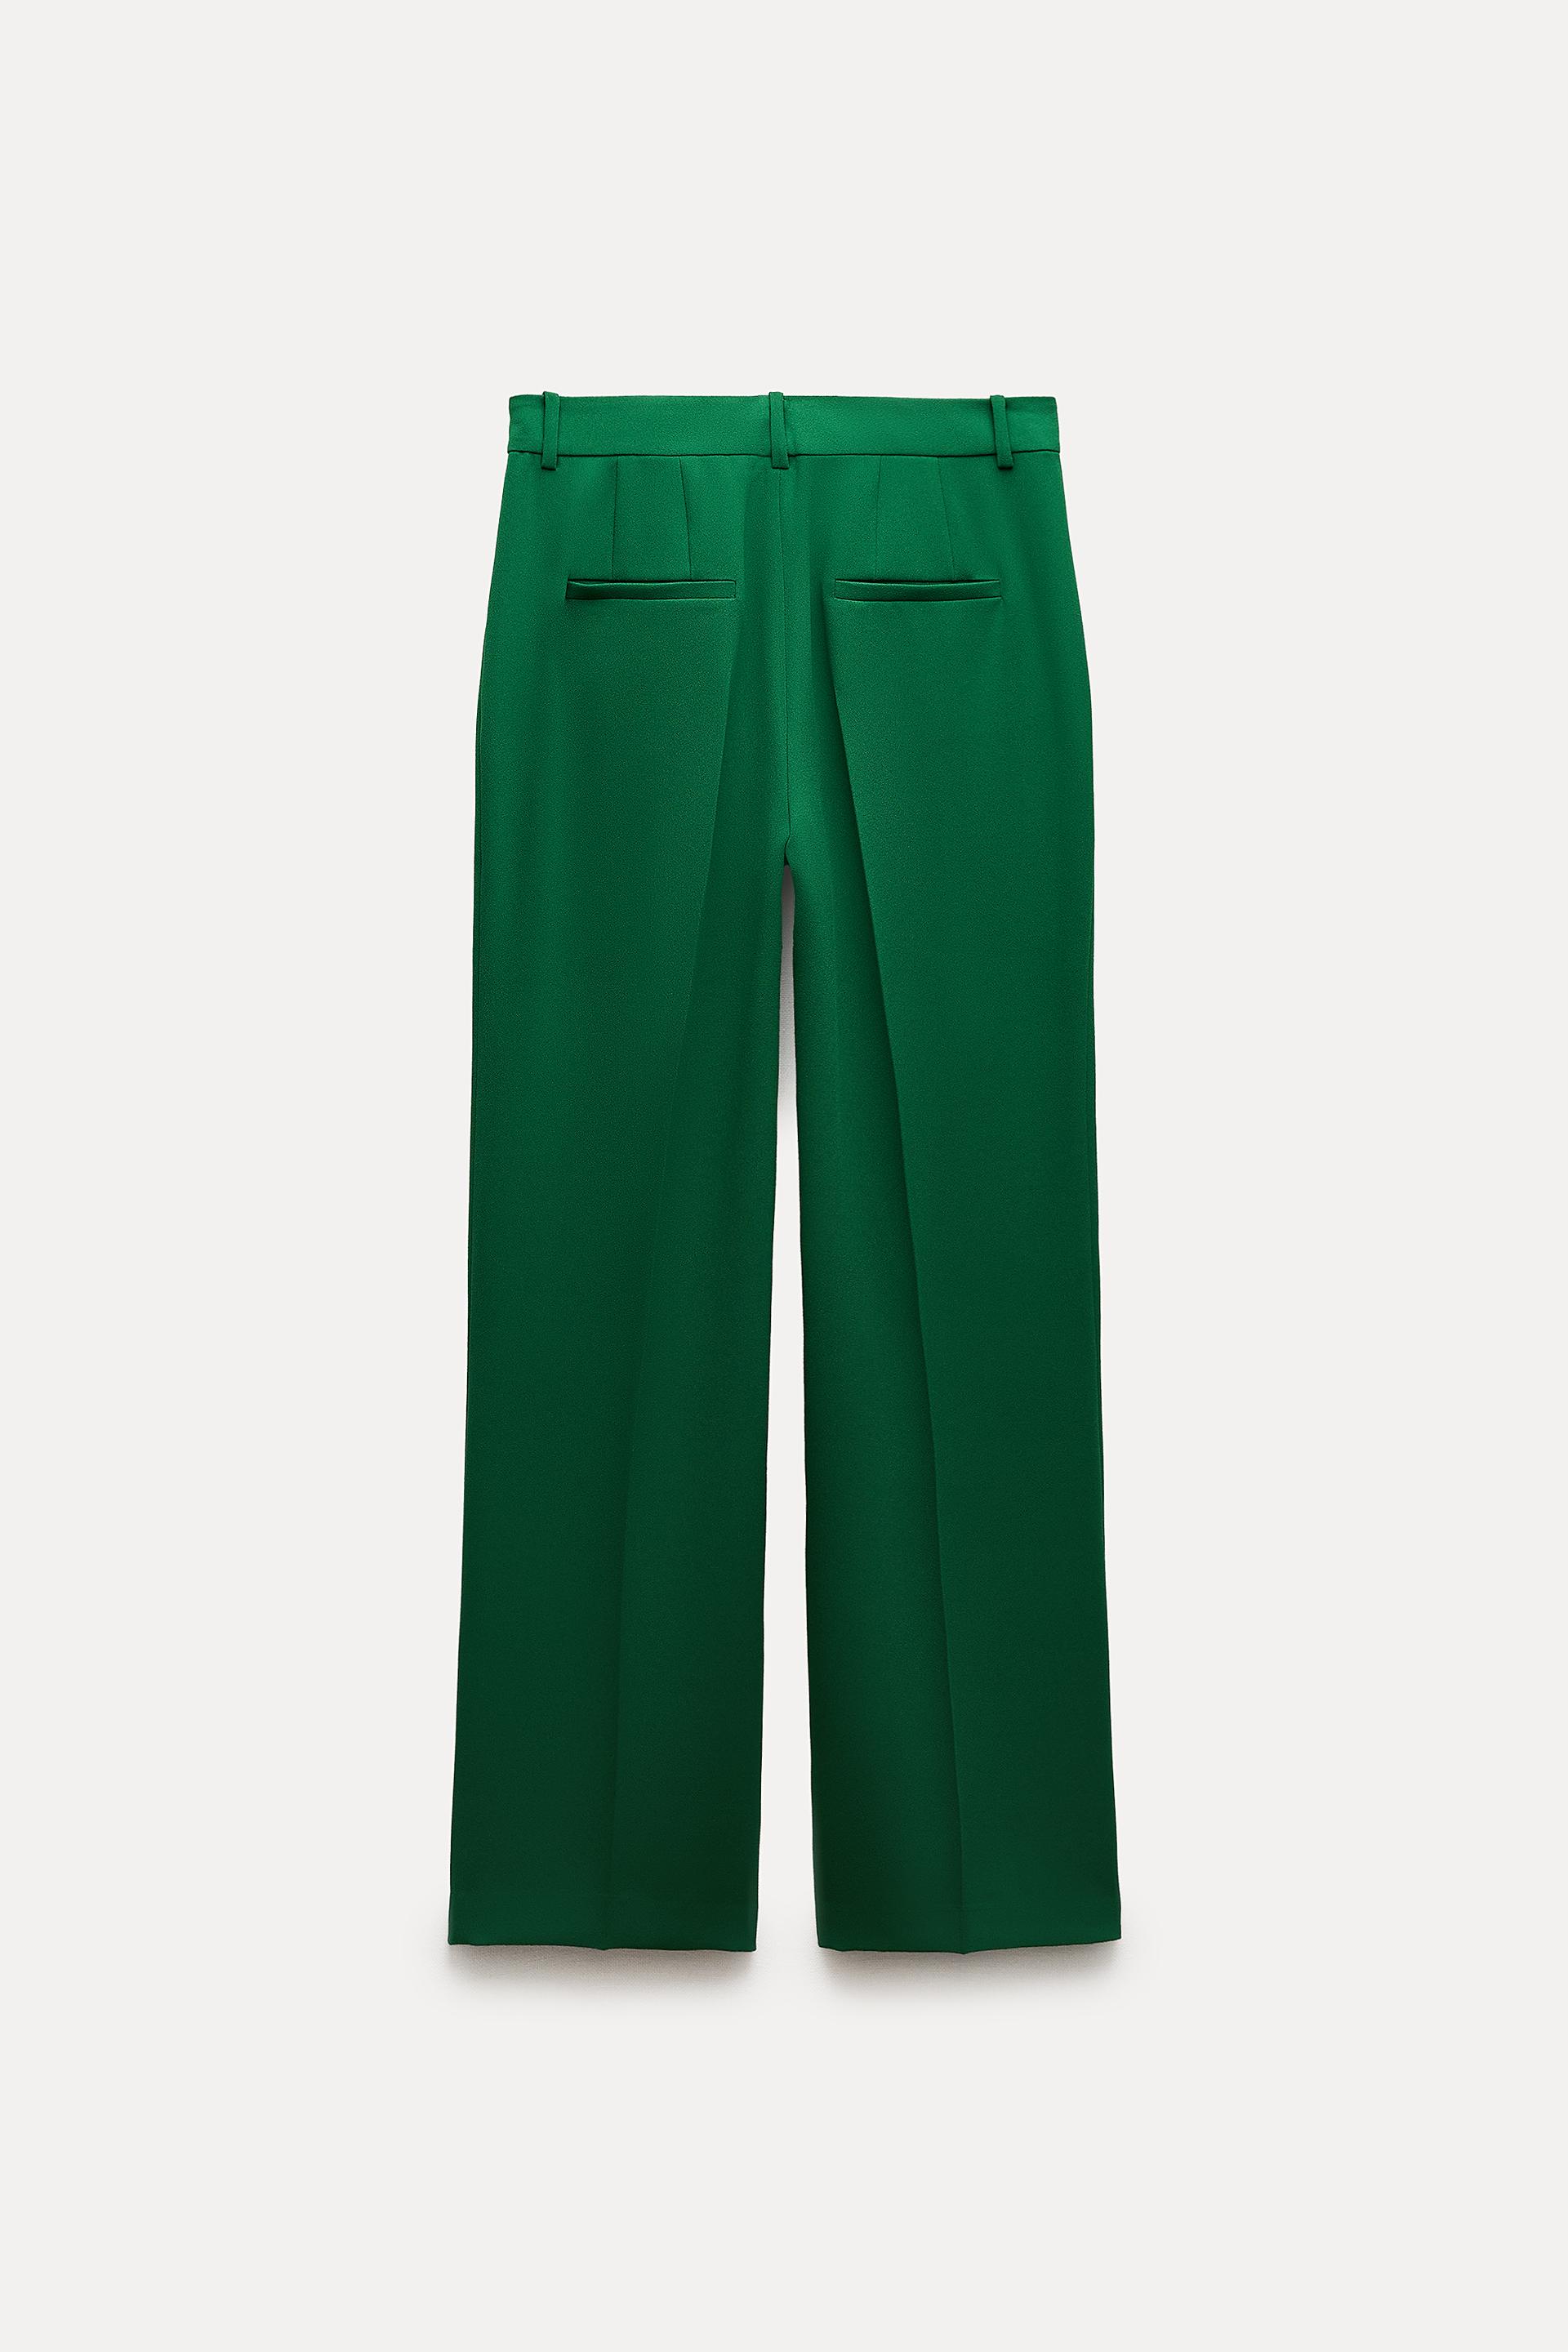 ZARA GREEN TROUSERS Suit Pants Francoise High Waist Straight Fit L